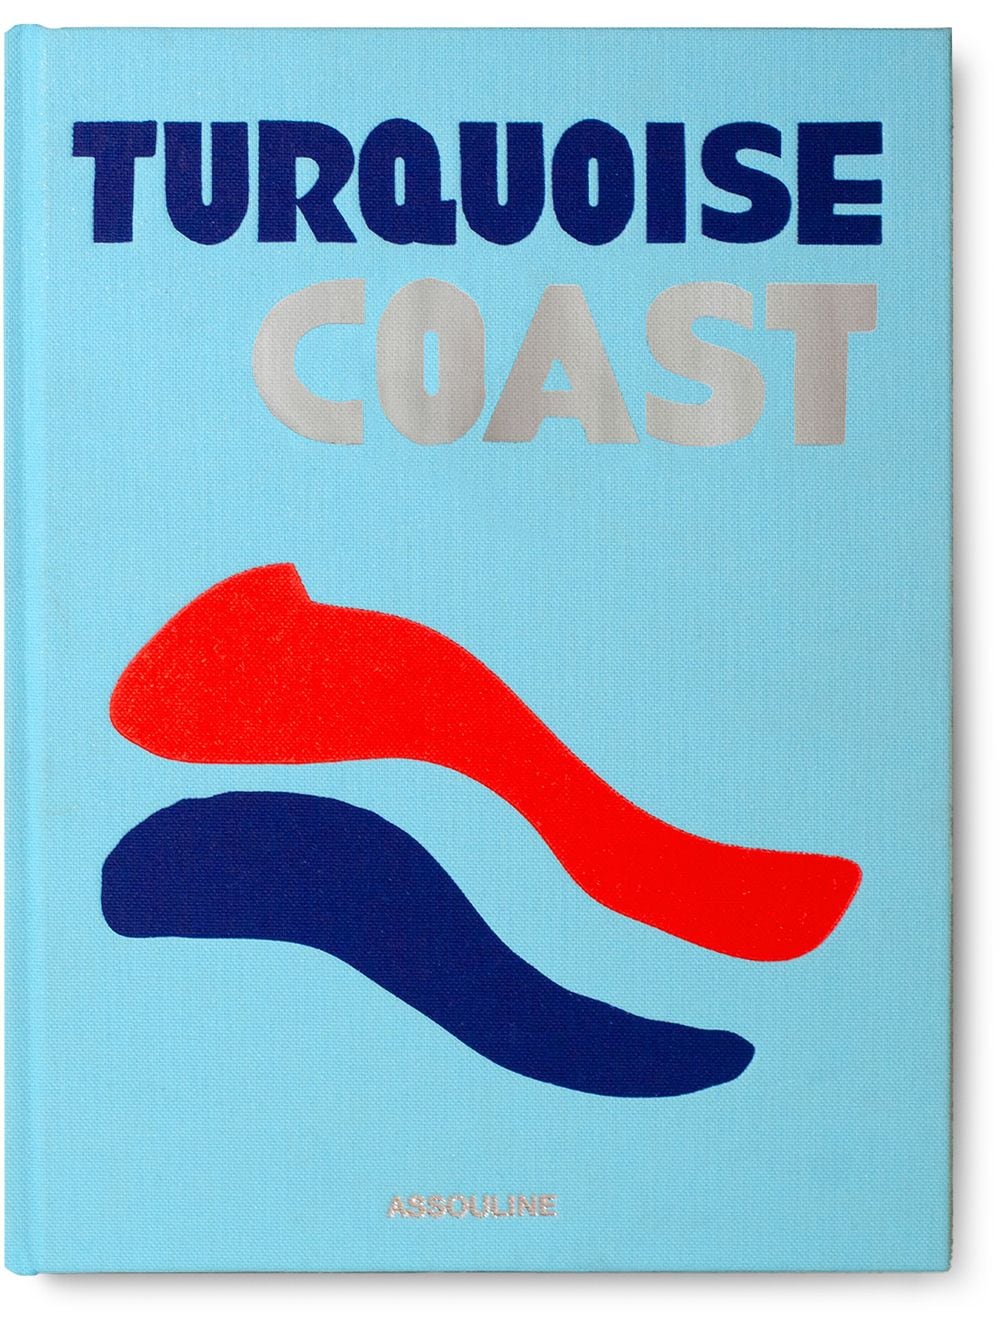 TURQUOISE COAST BOOK - $105